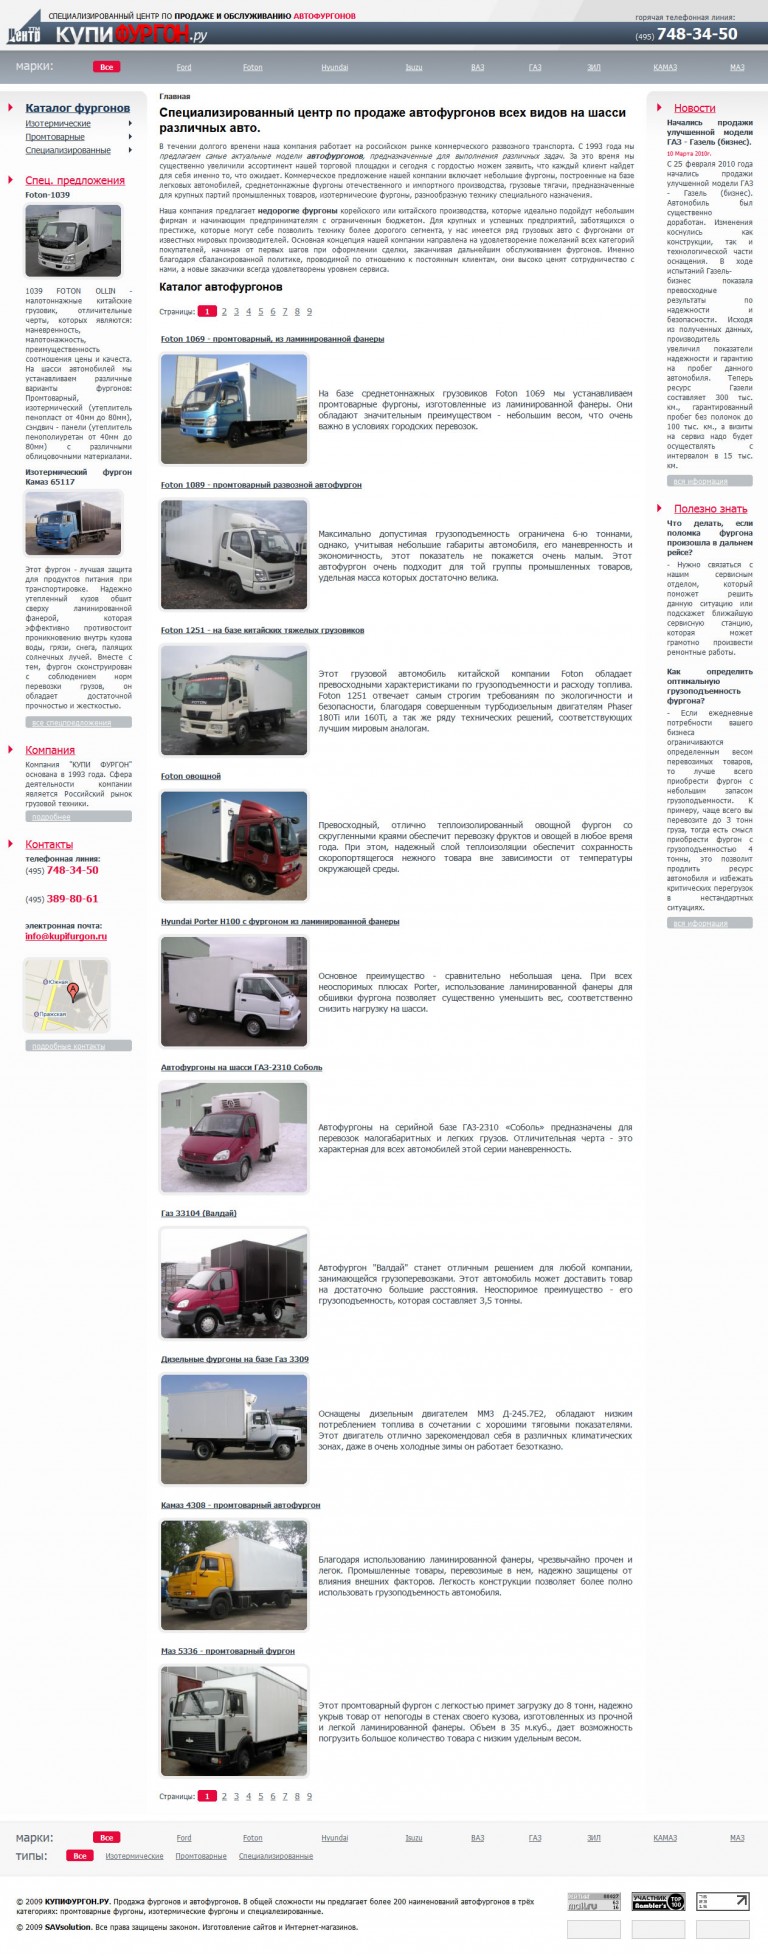 Список товаров интернет-каталога "Купи фургон" компании "Центр-ТТМ